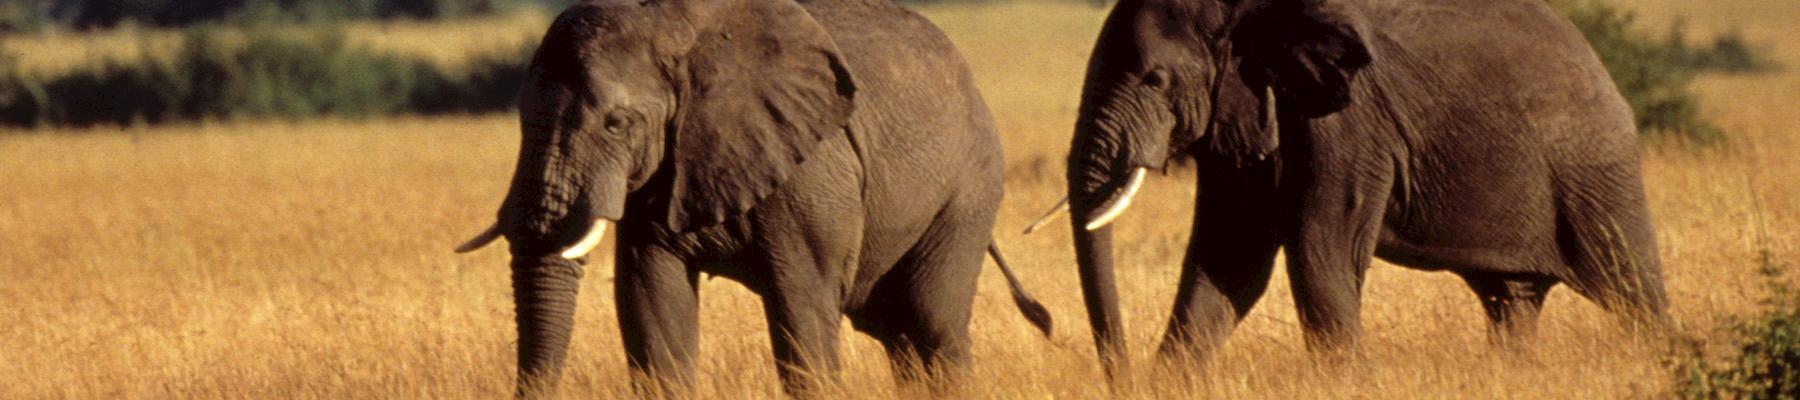 Two African elephants Loxodonta africana © Howard Buffett / WWF-US